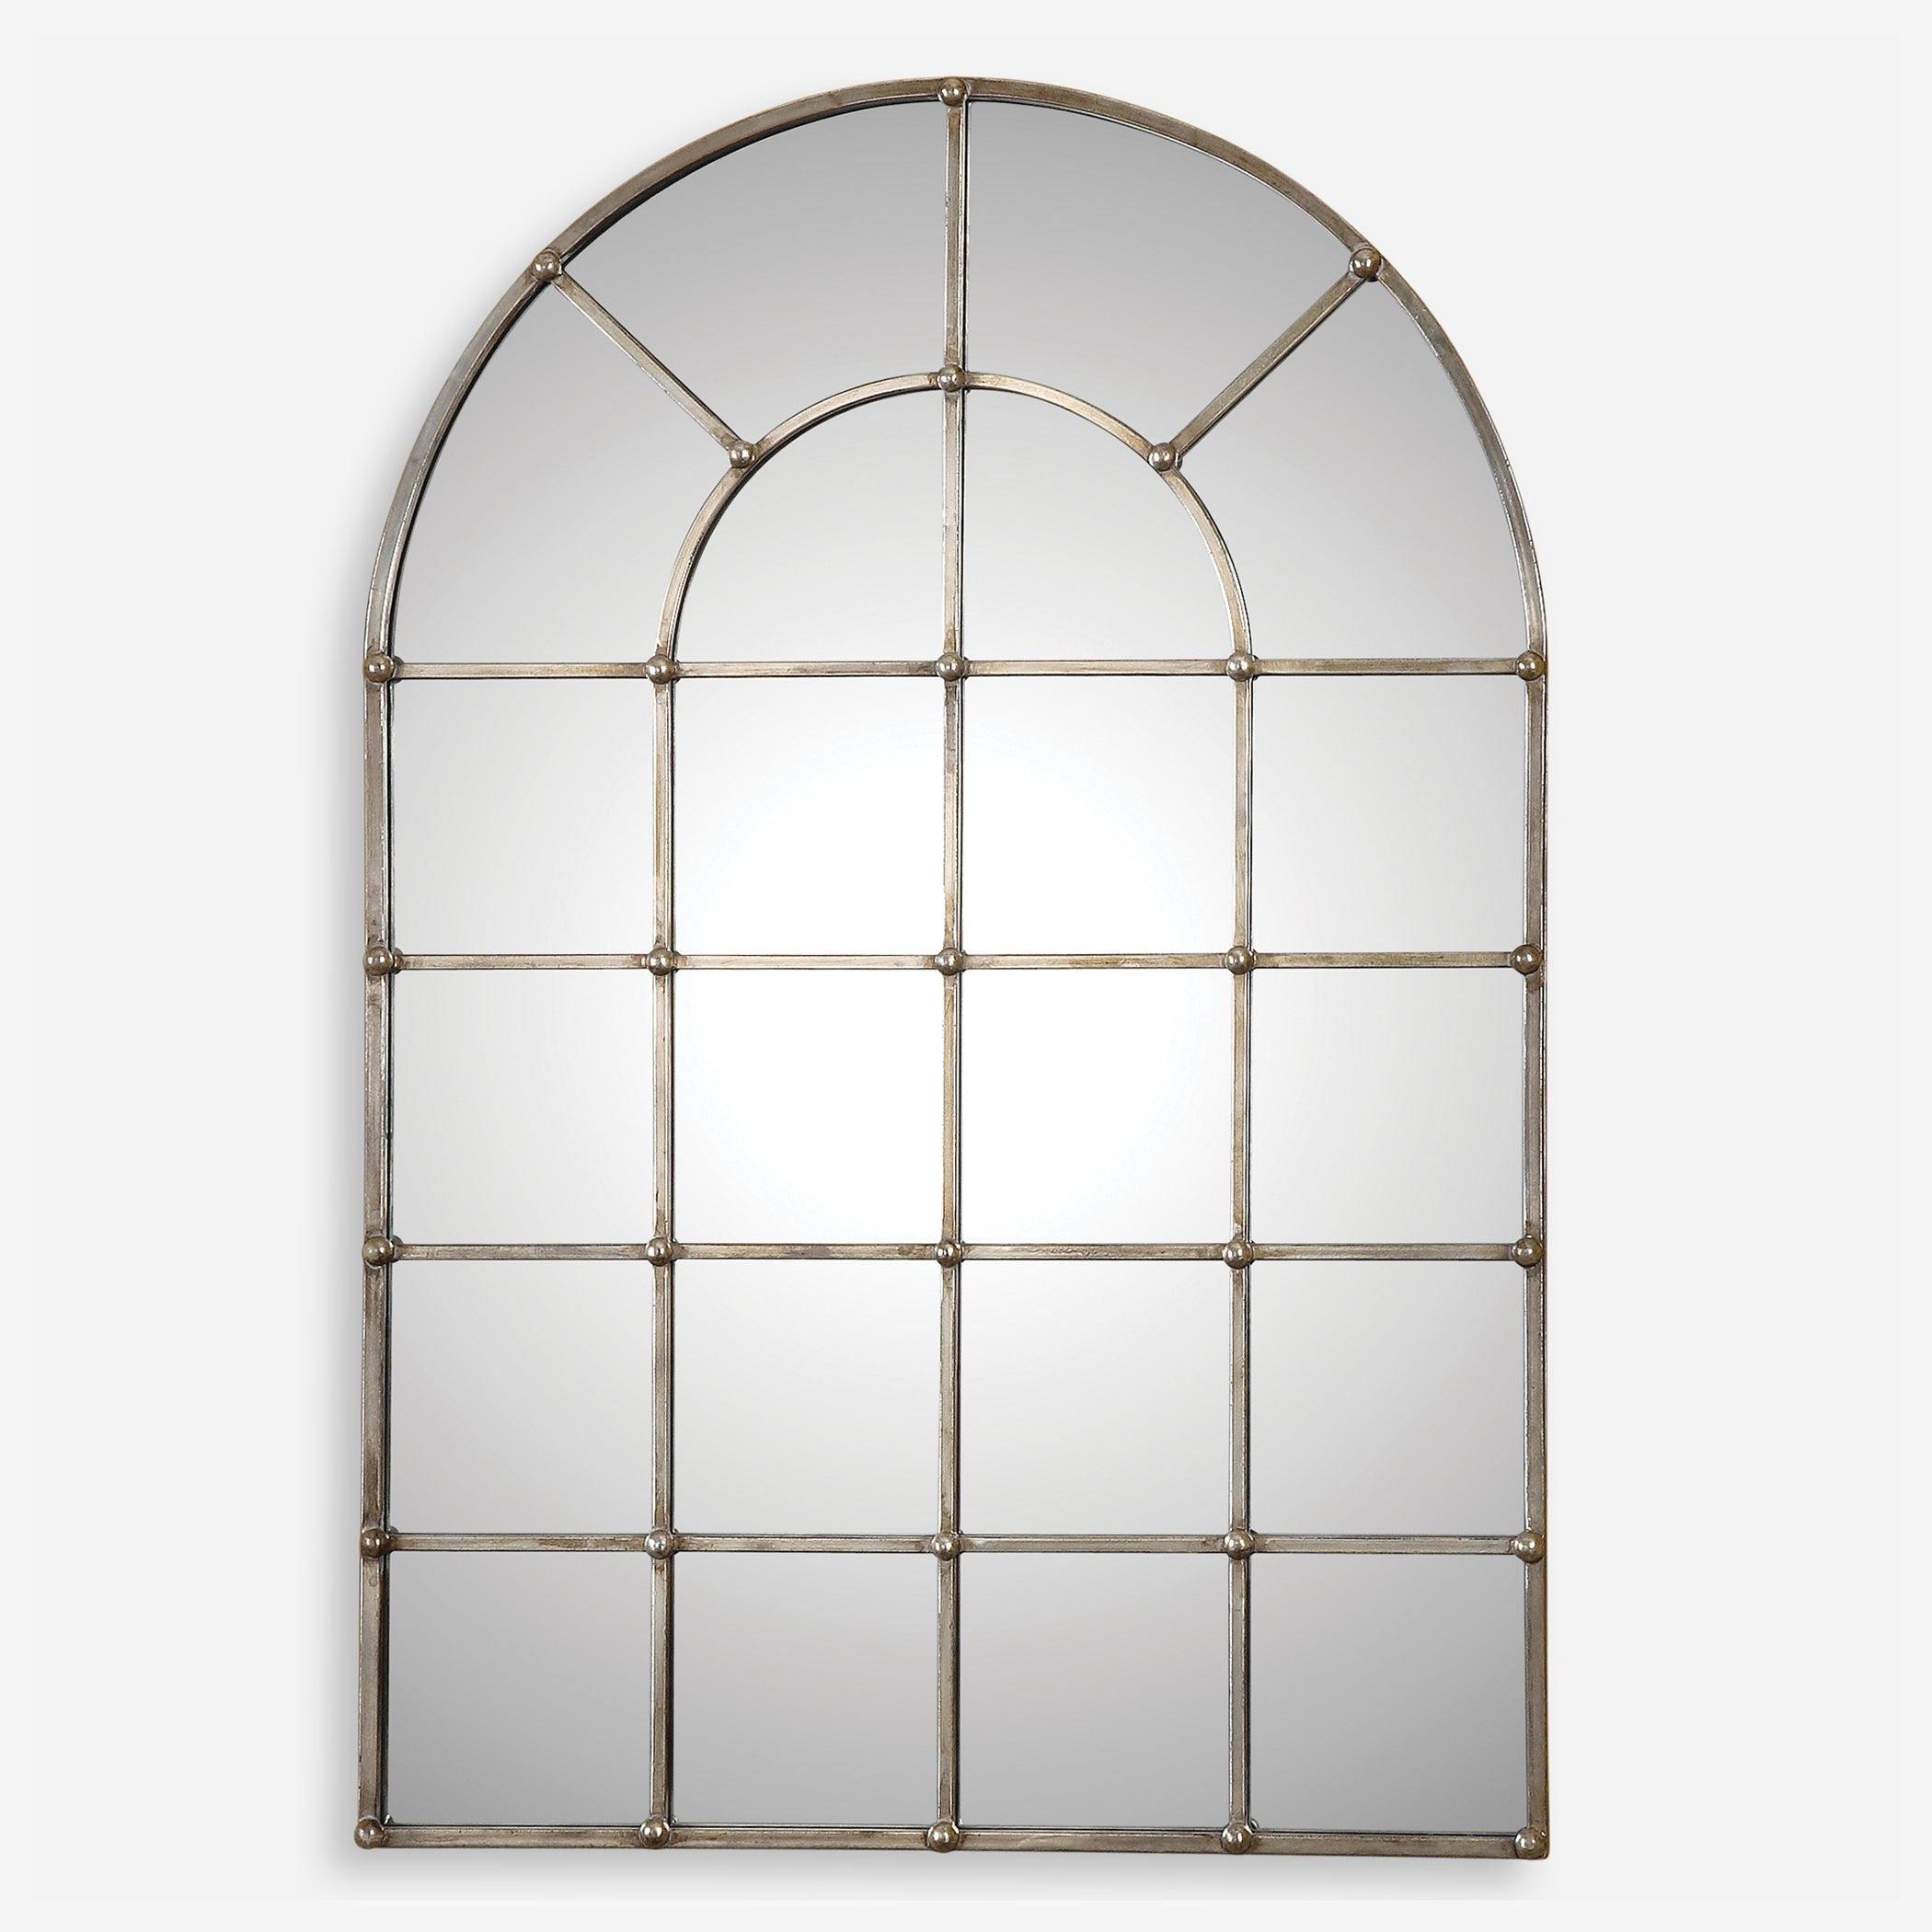 Uttermost Barwell Arch Arch Window Mirrors Arch Window Mirrors Uttermost   